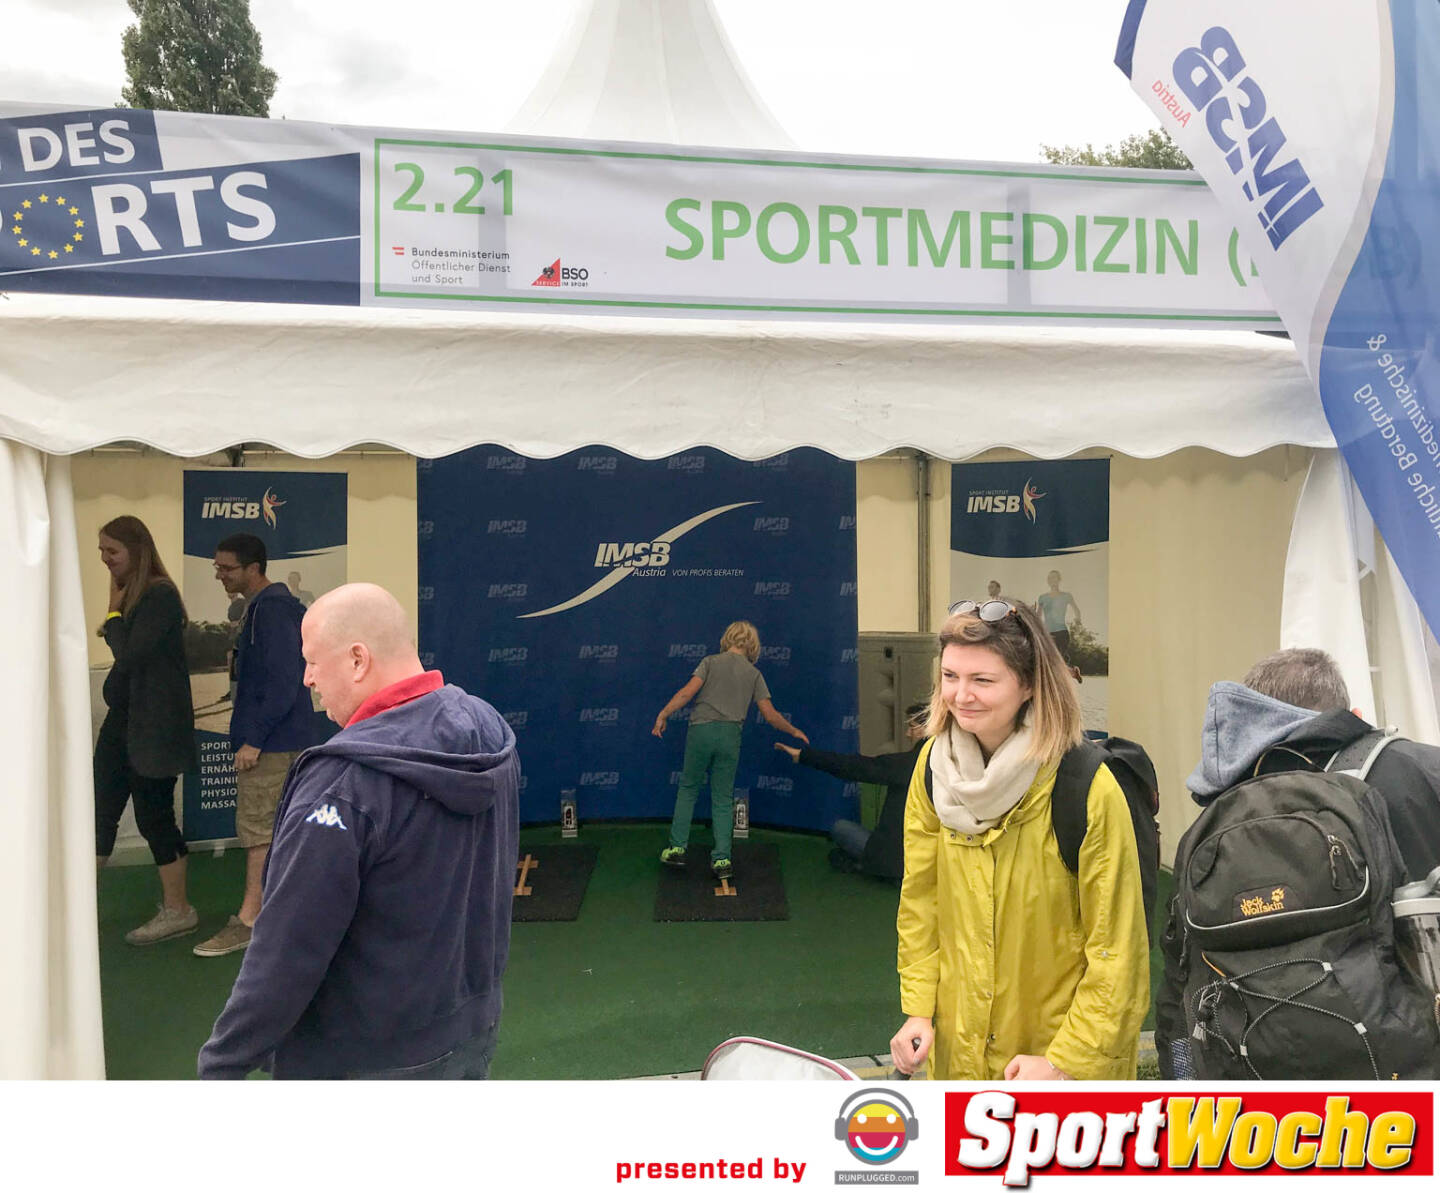 Sportmedizin (IMSB)